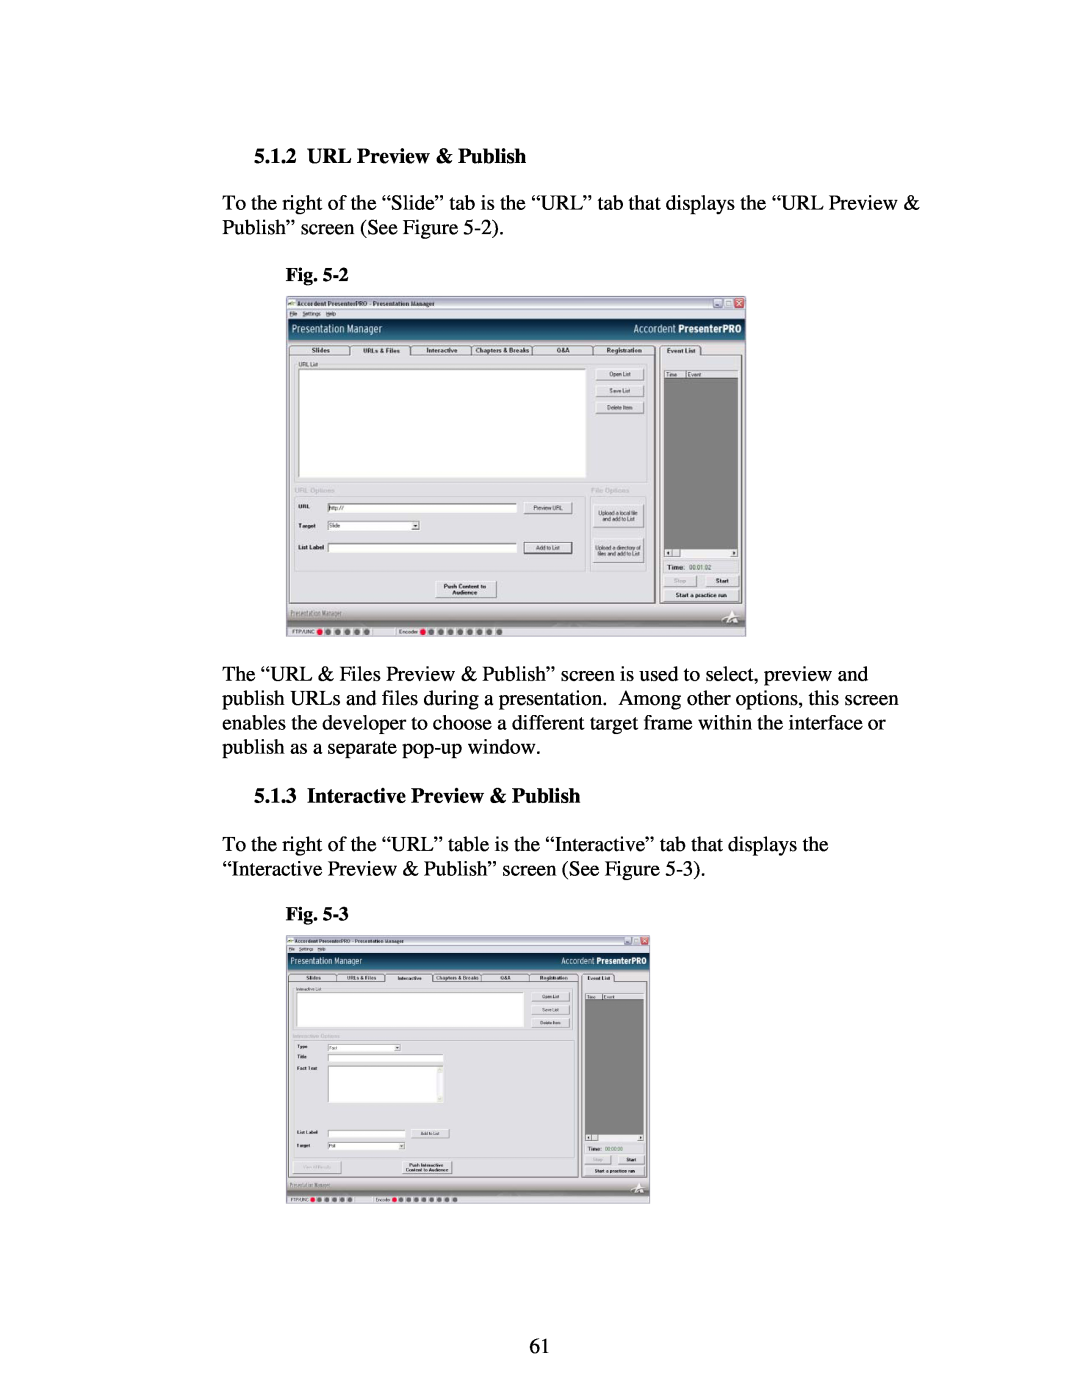 Polycom 6.1 user manual URL Preview & Publish, Interactive Preview & Publish 